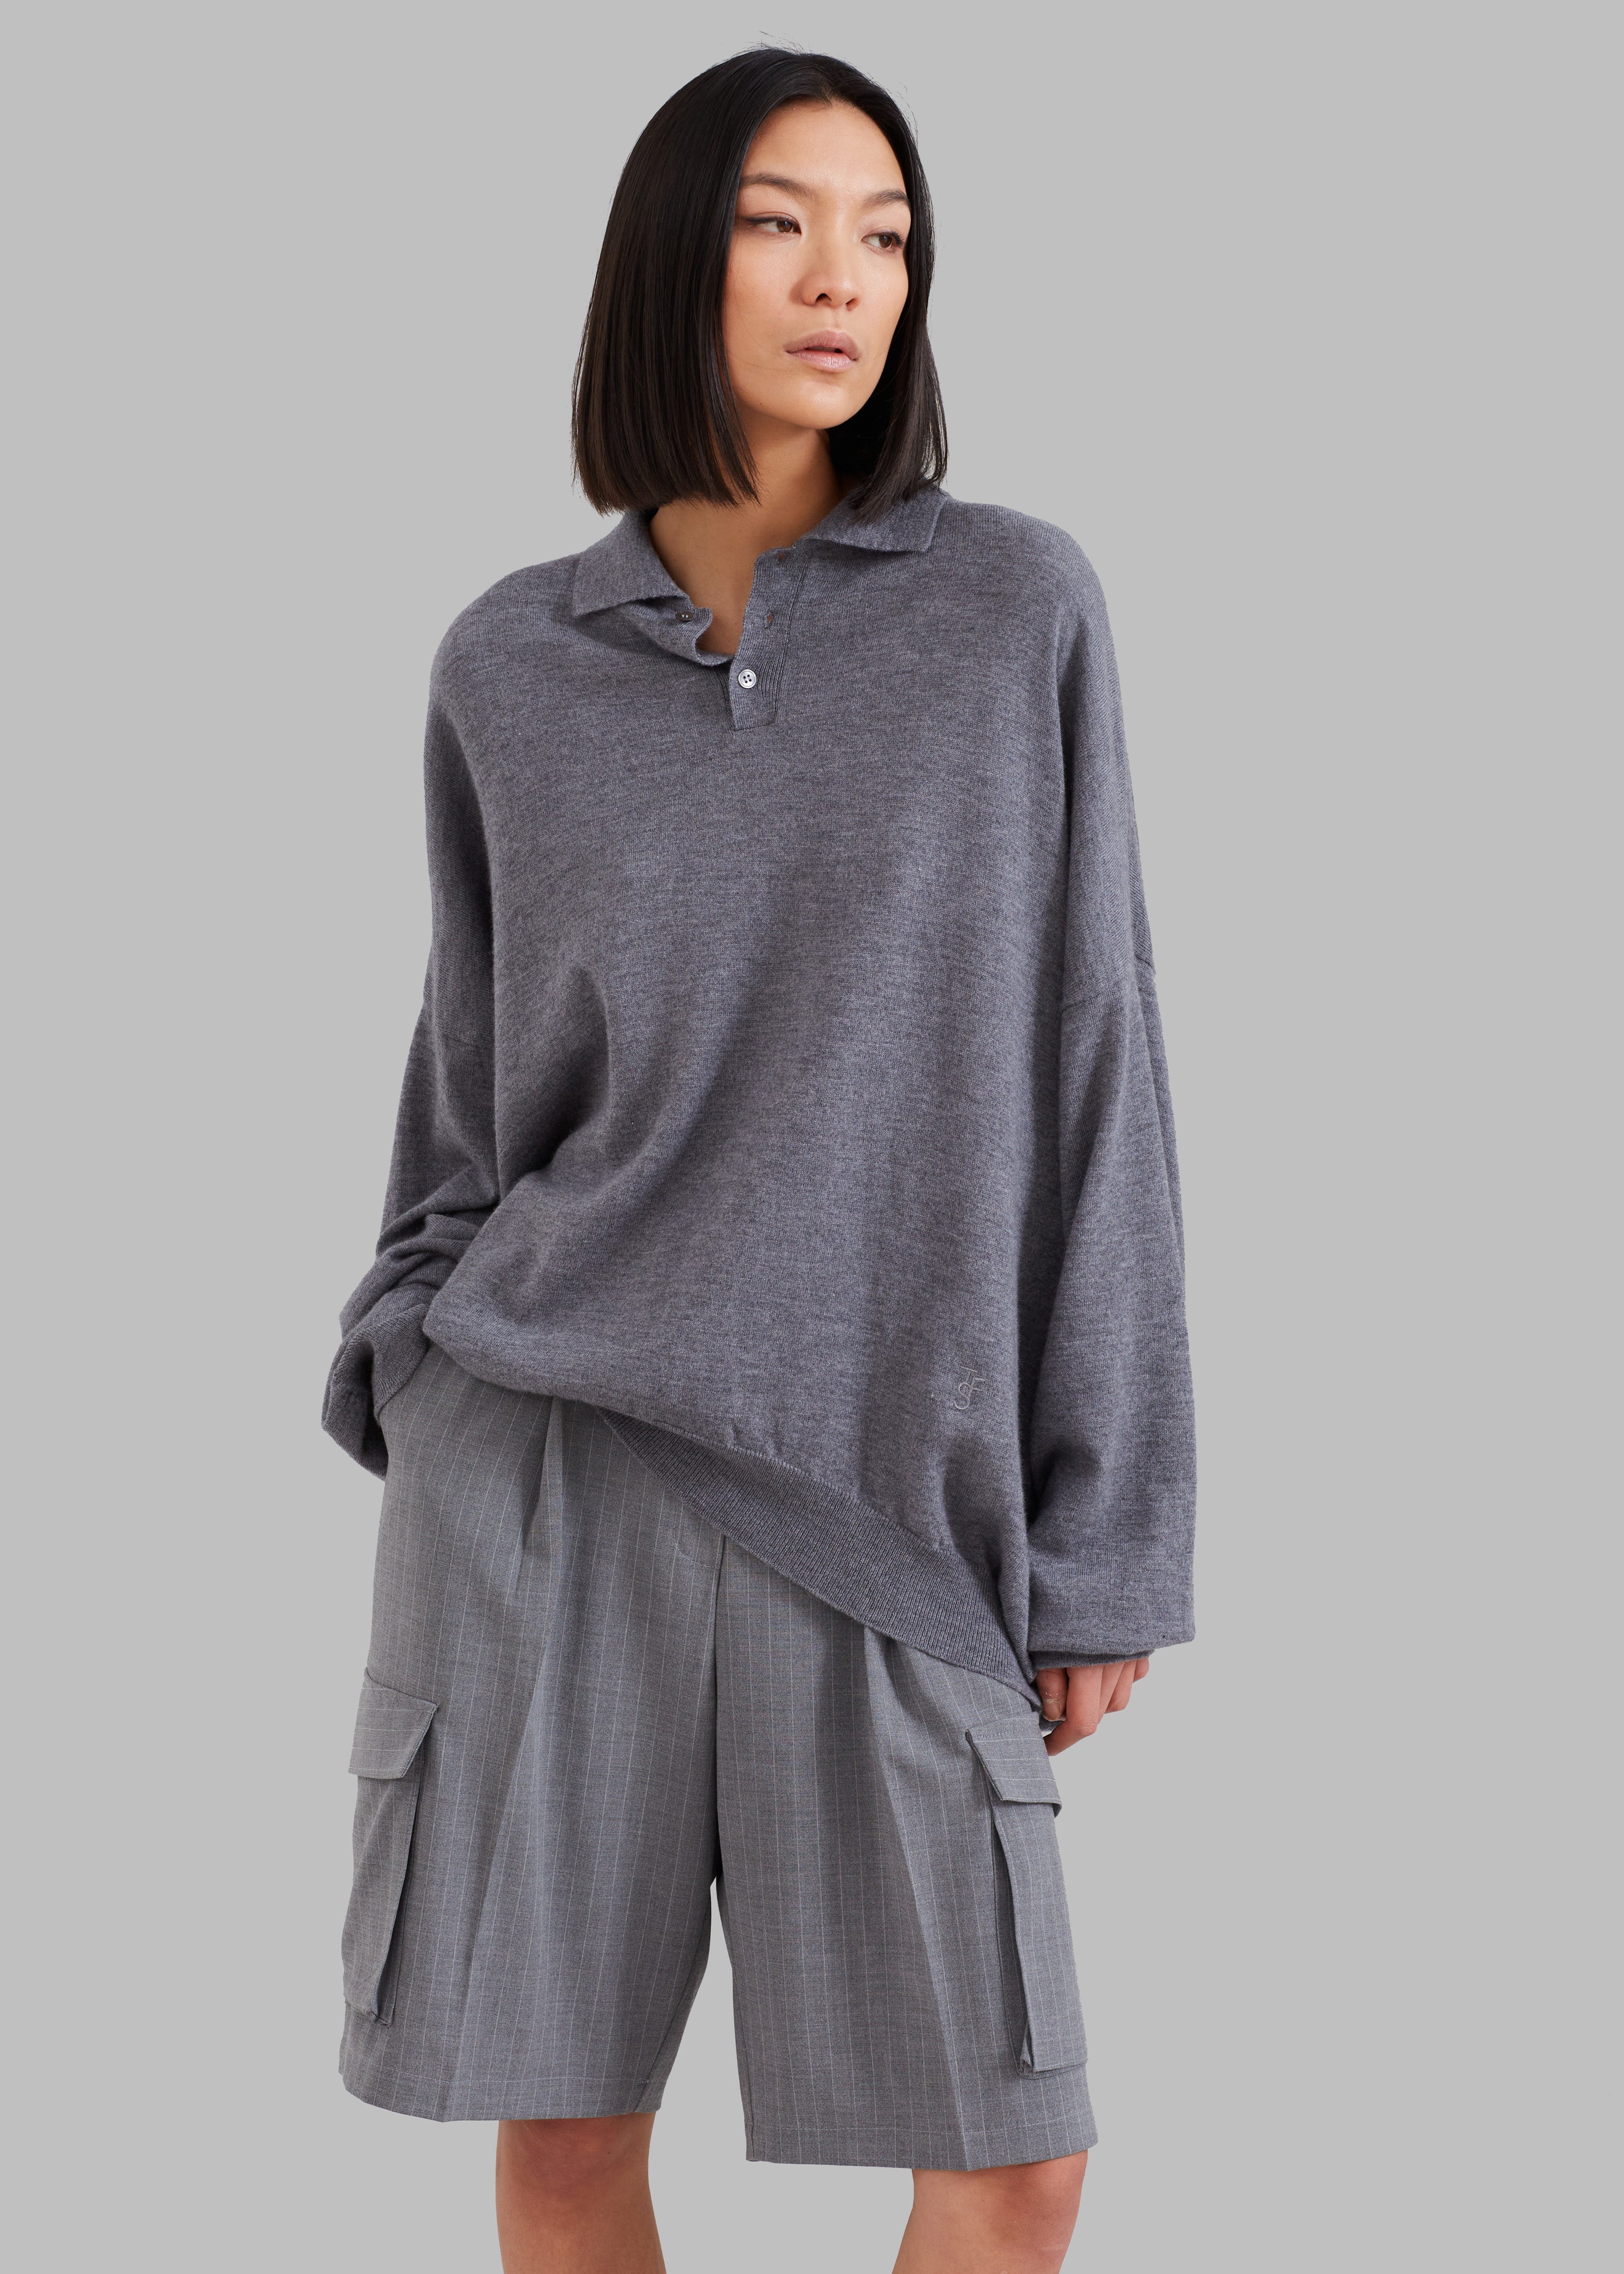 Meriel Polo Sweater - Grey - 2